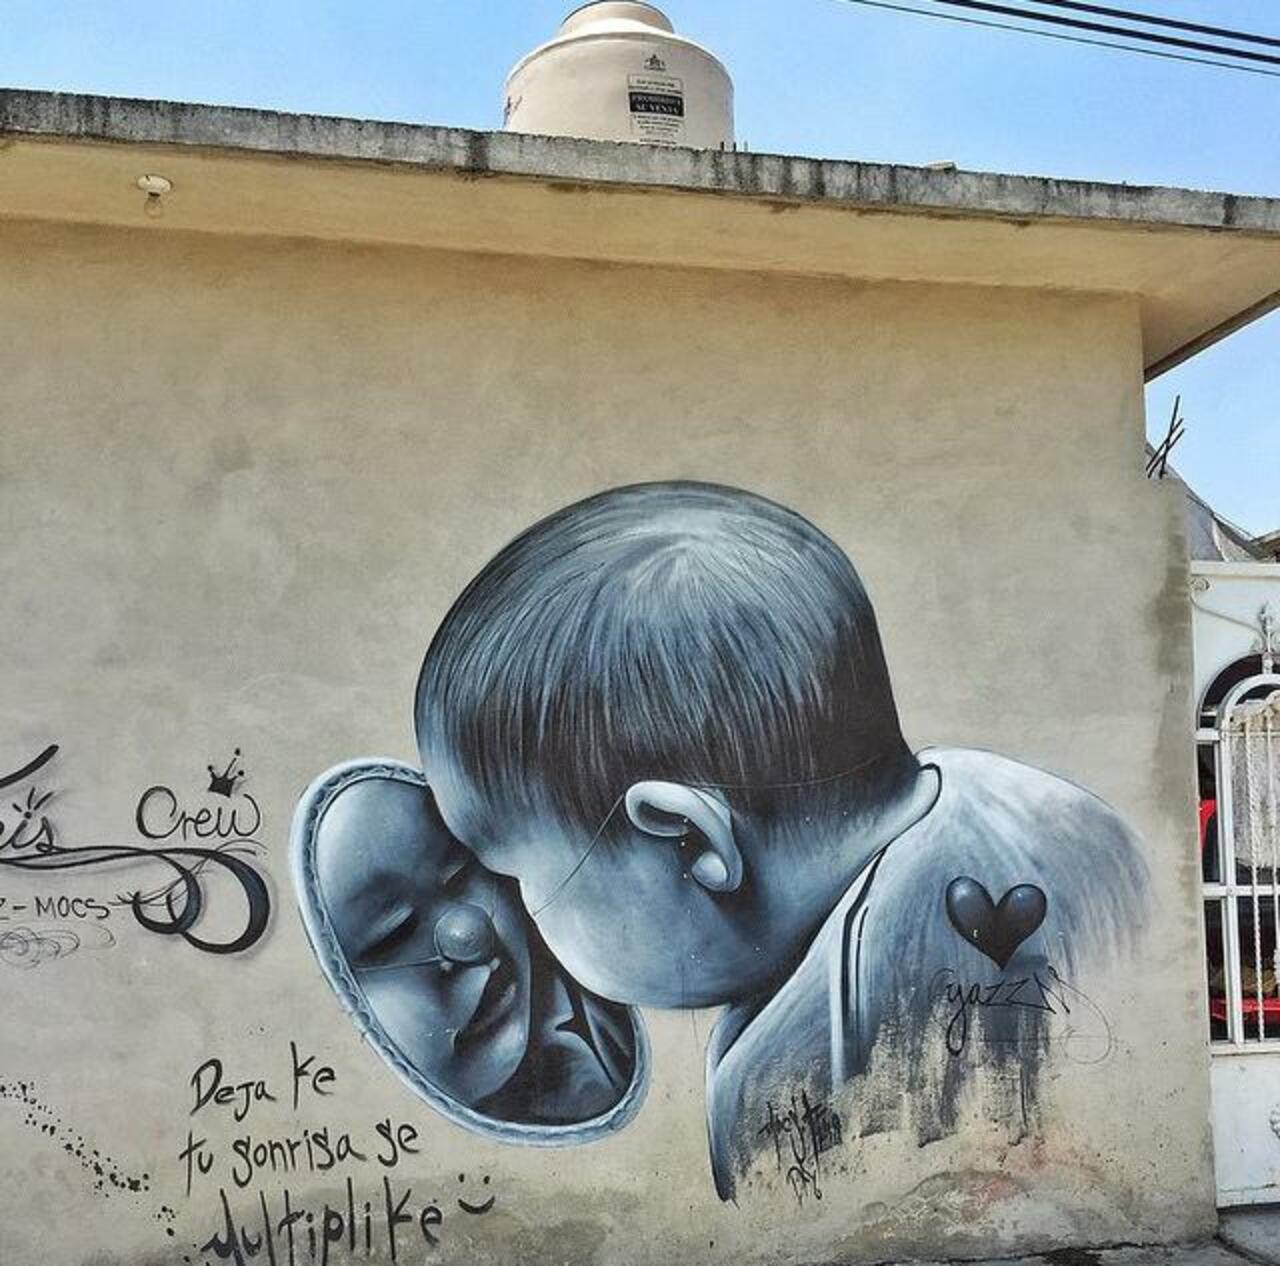 Street Art by DF6 Crew in Morelos, Mexico

#art #arte #graffiti #streetart http://t.co/1MylHoCEKl